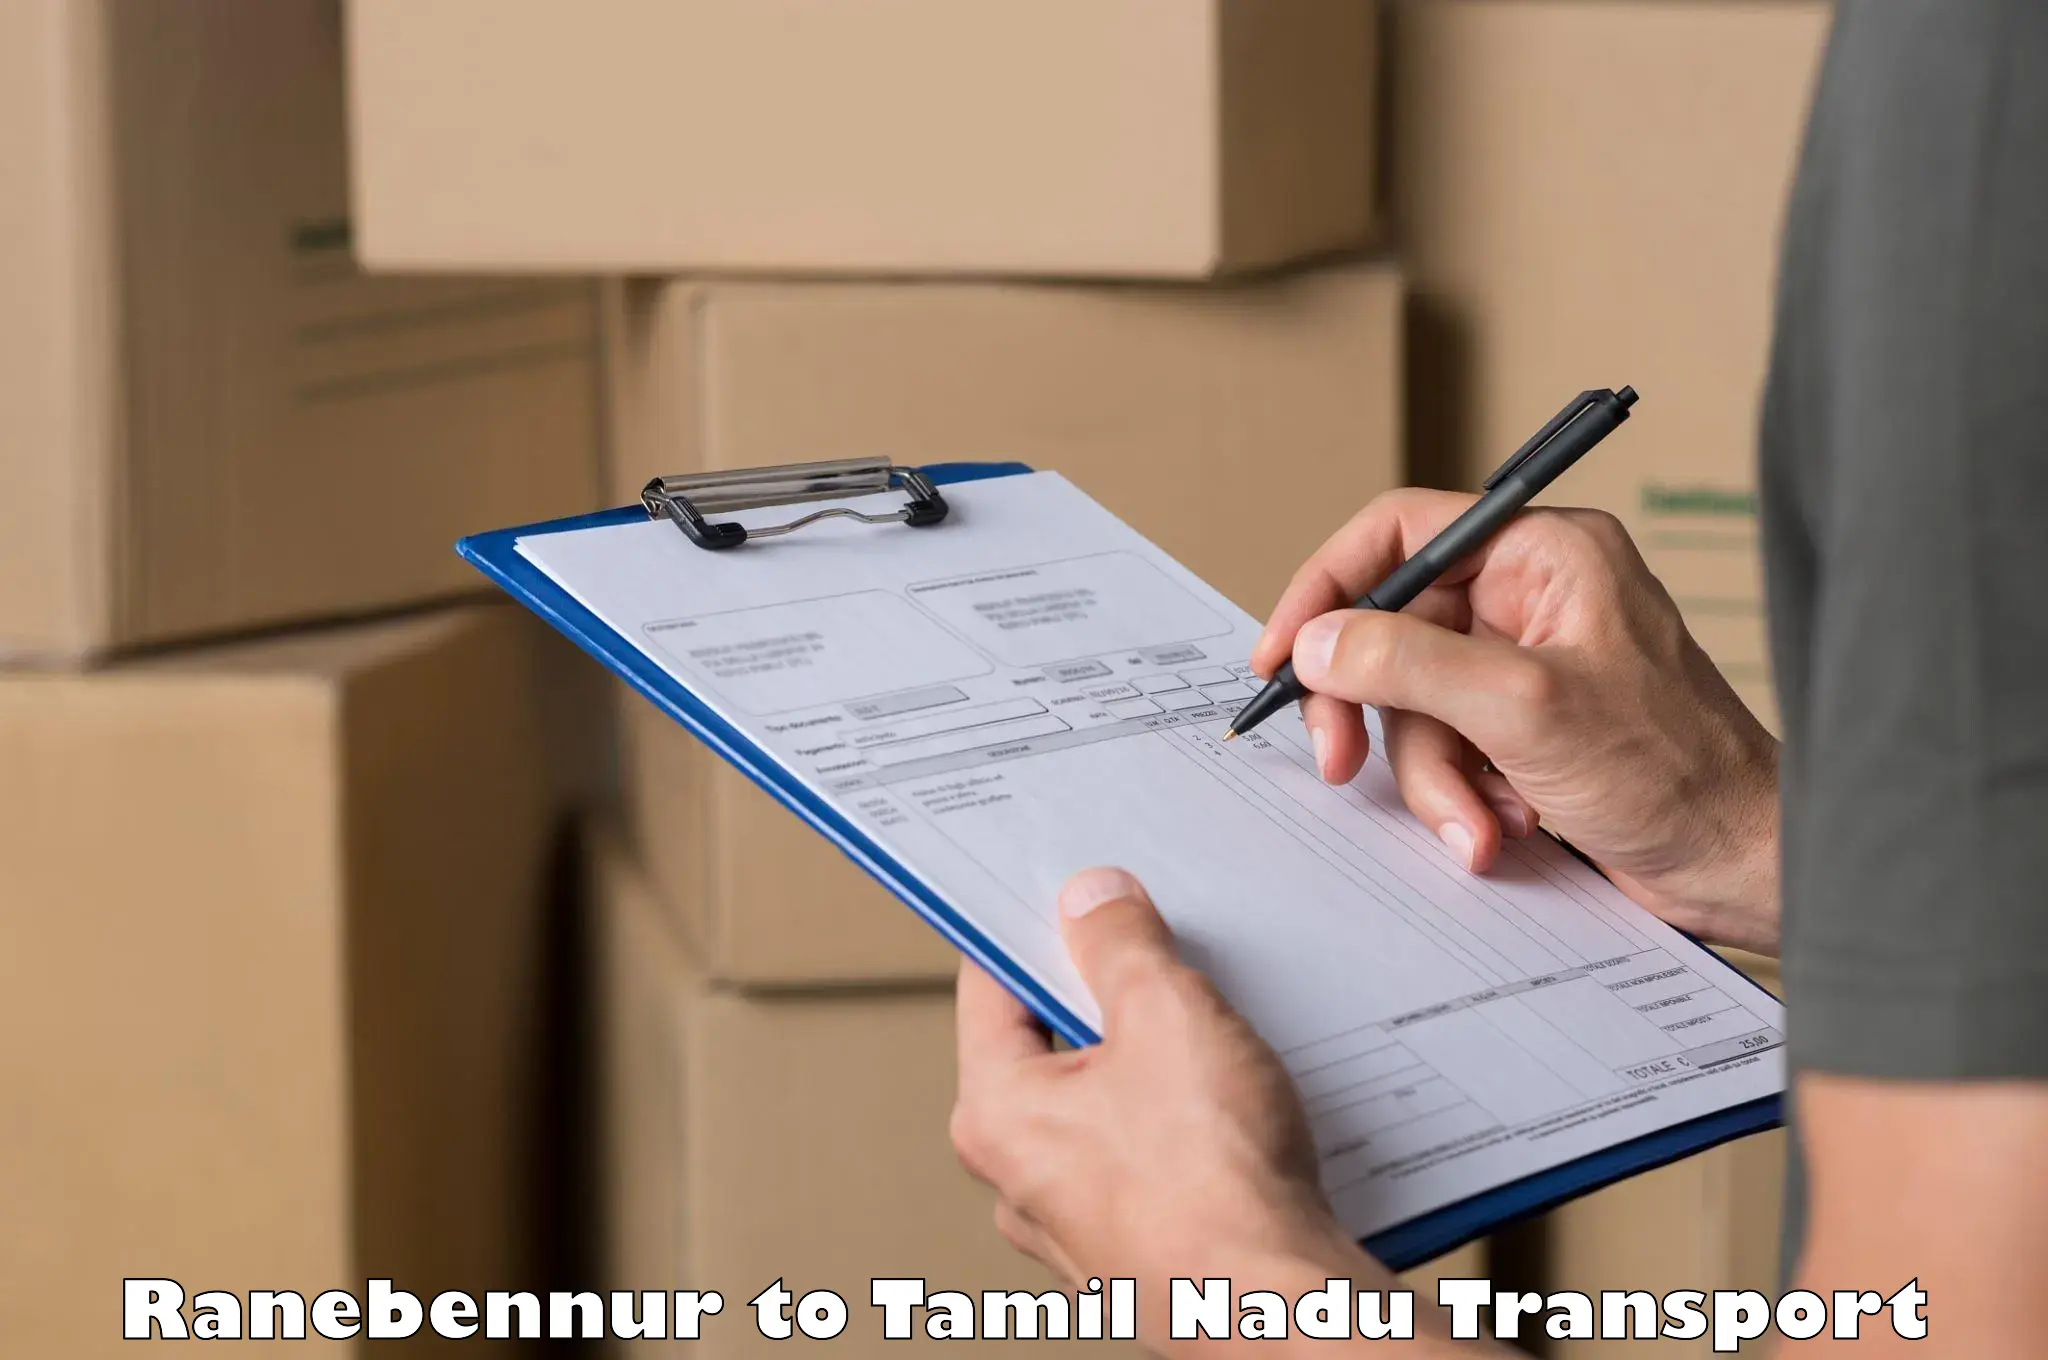 Daily transport service Ranebennur to Villupuram